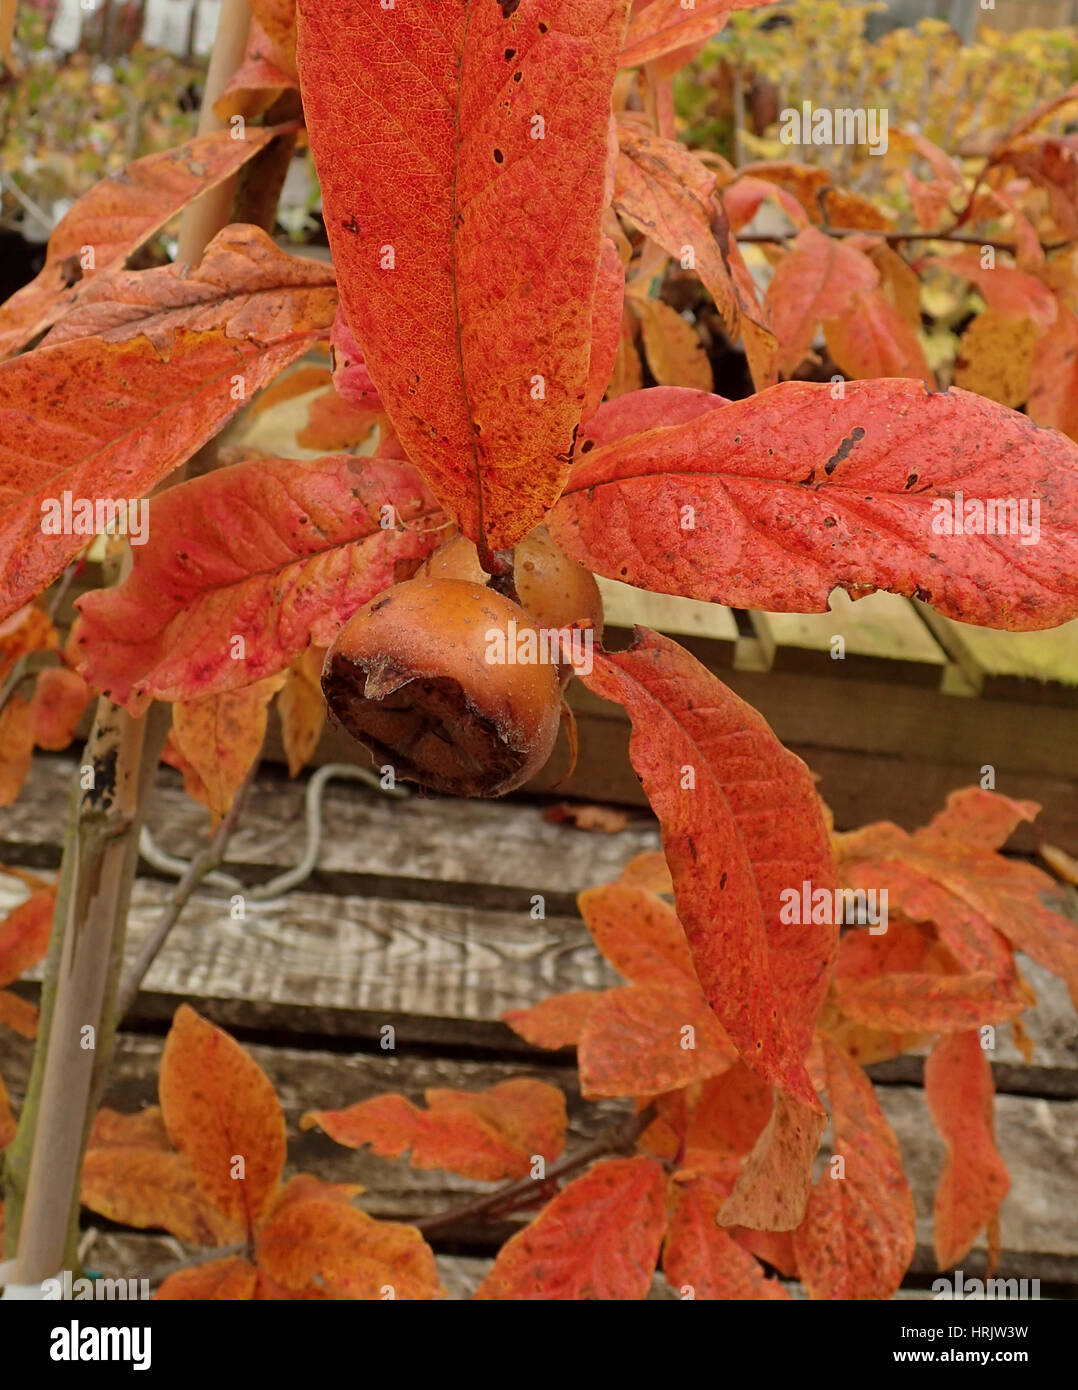 Medlar fruit and red autumn medlar leaves on a sapling Stock Photo